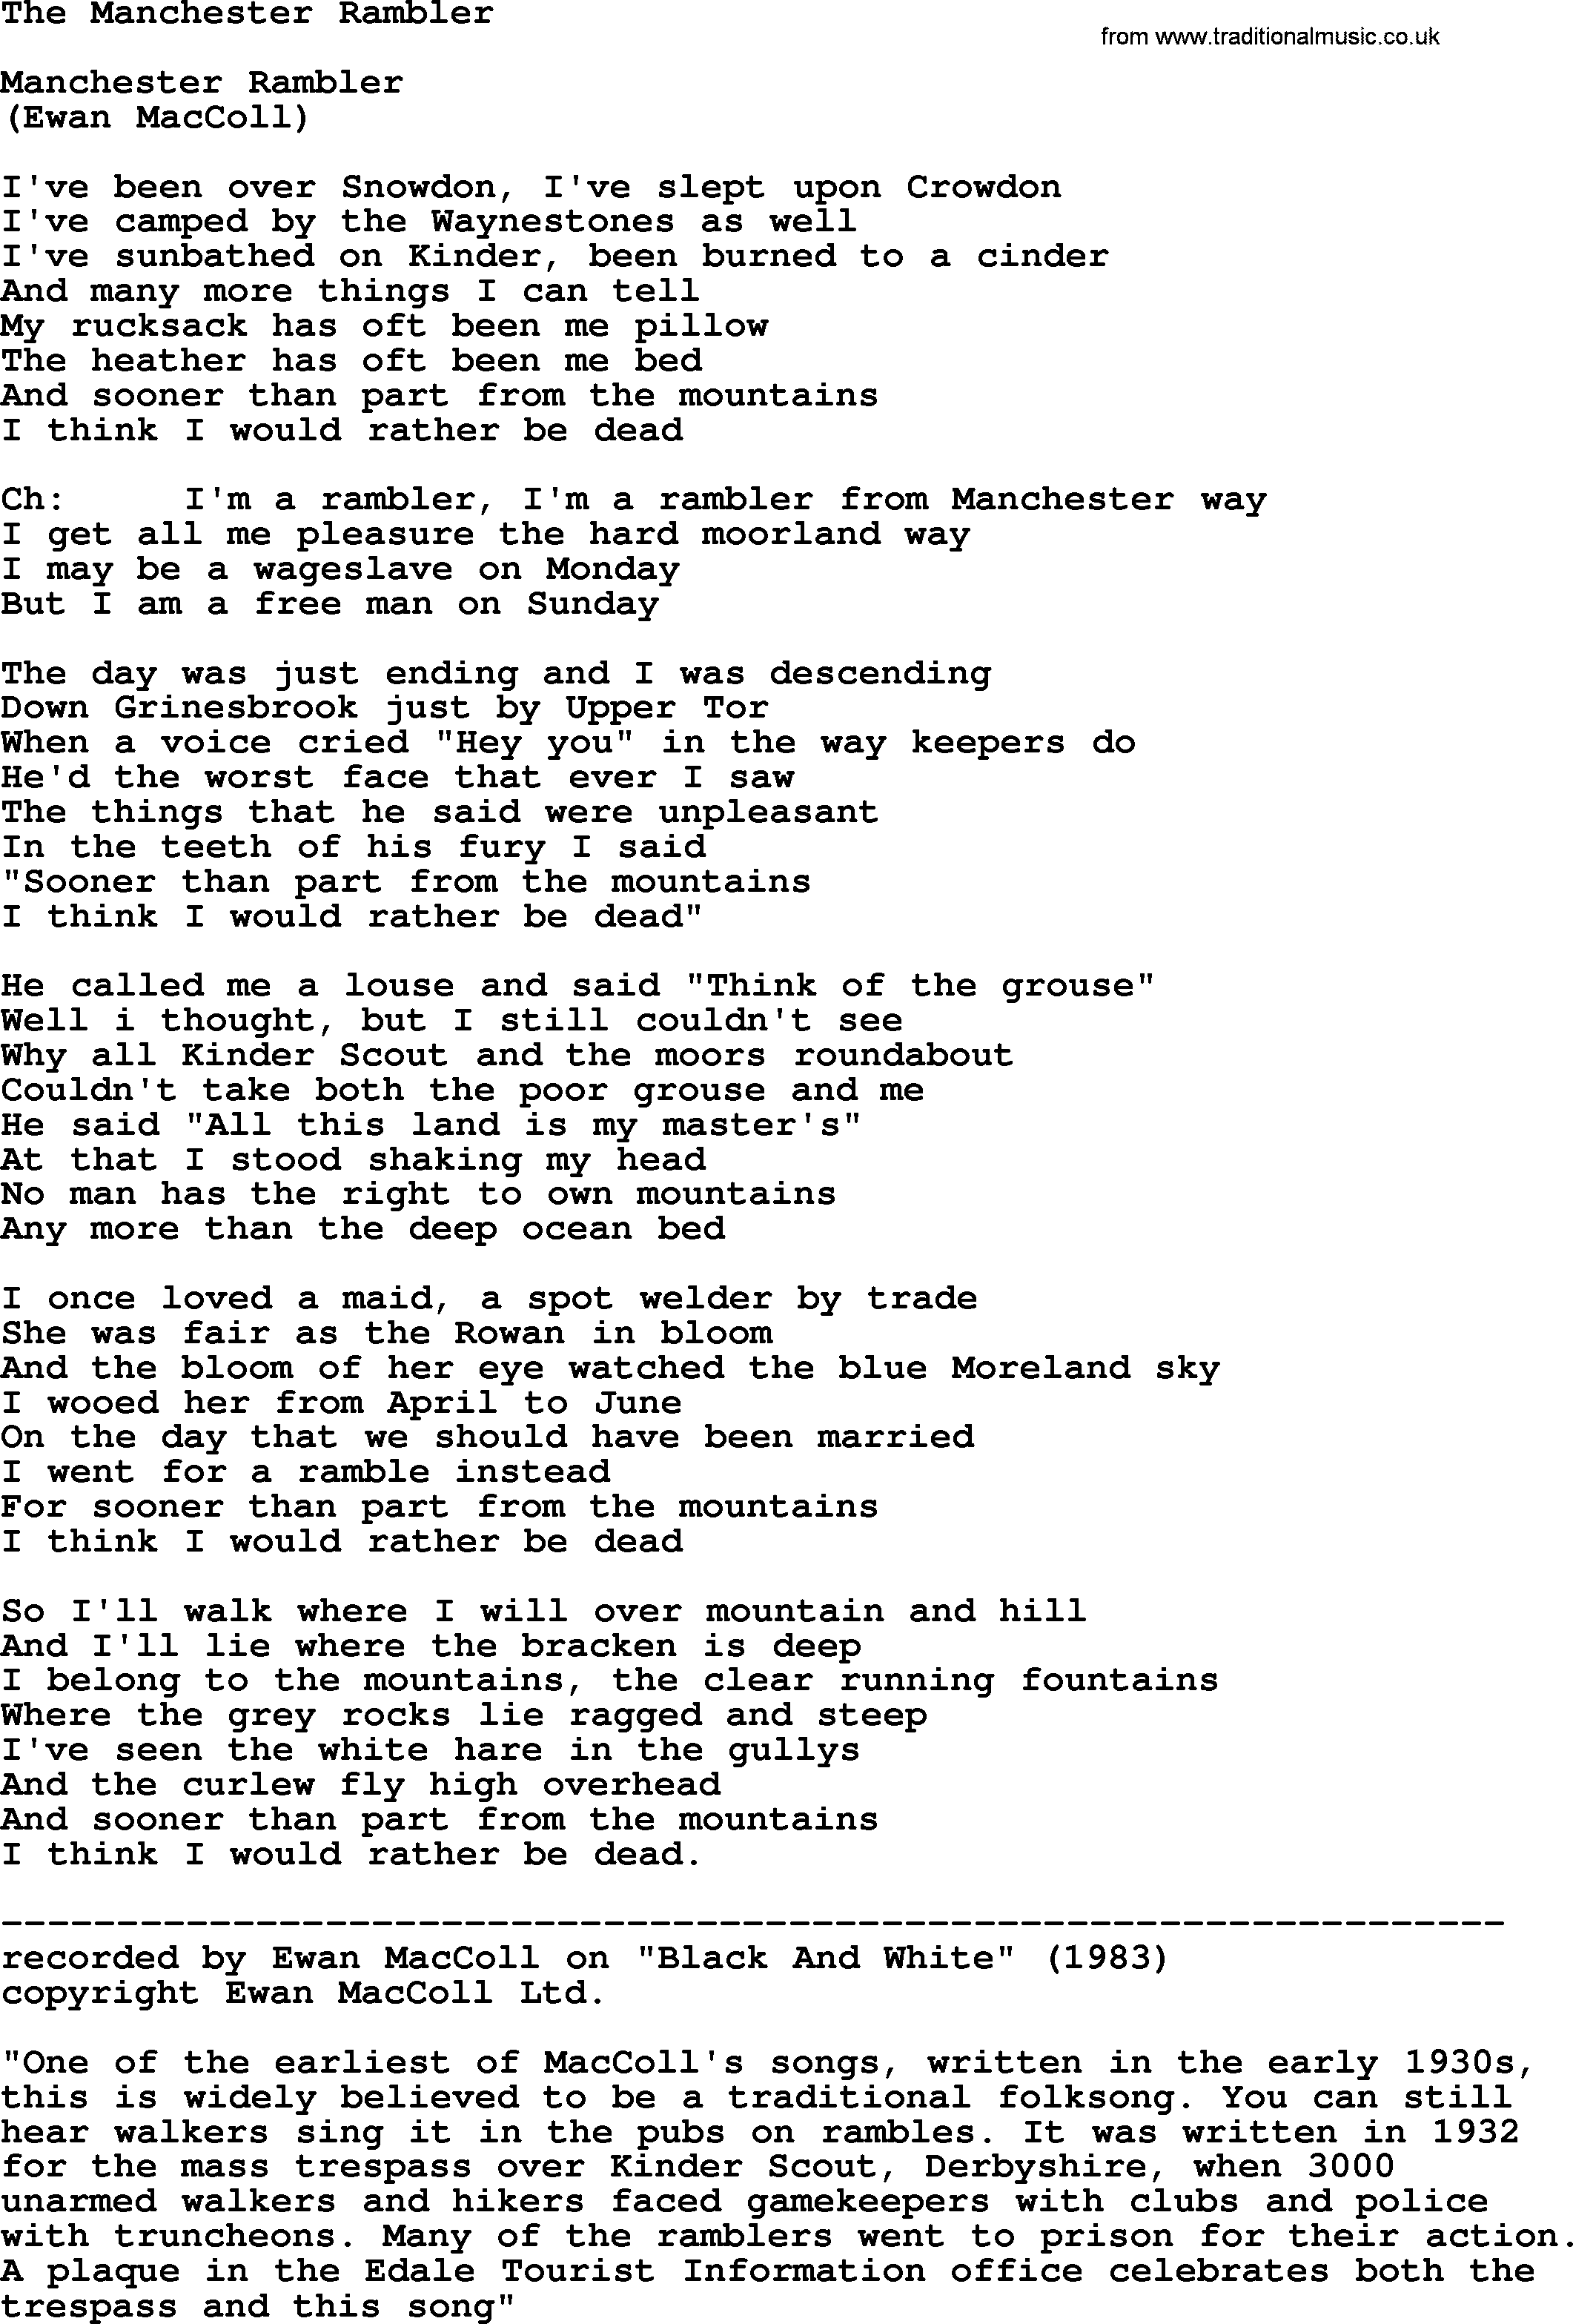 The Dubliners song: The Manchester Rambler, lyrics